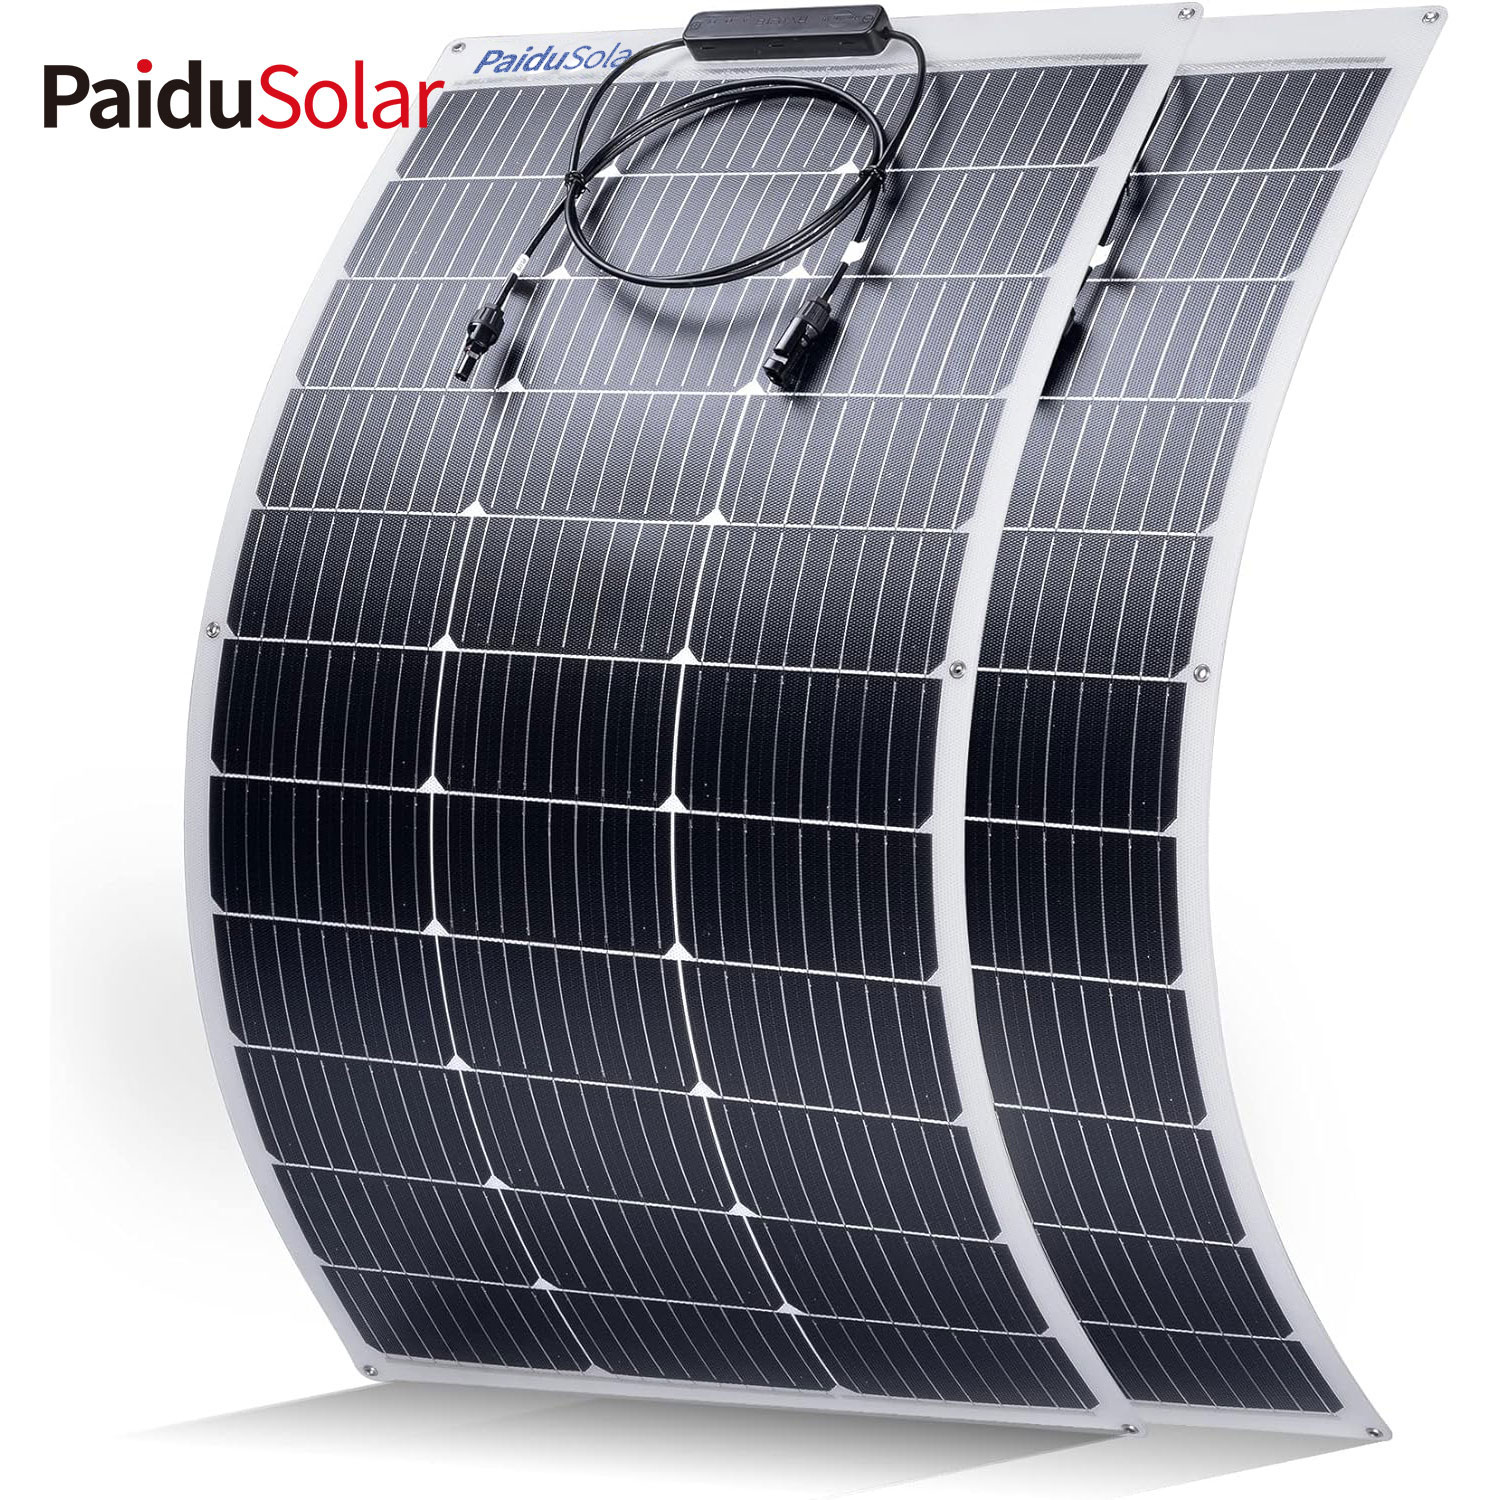 PaiduSolar 100W 12V Volt Semi-Flexible Solar Panel For Marine RV Trailer Boat Cabin Van Car